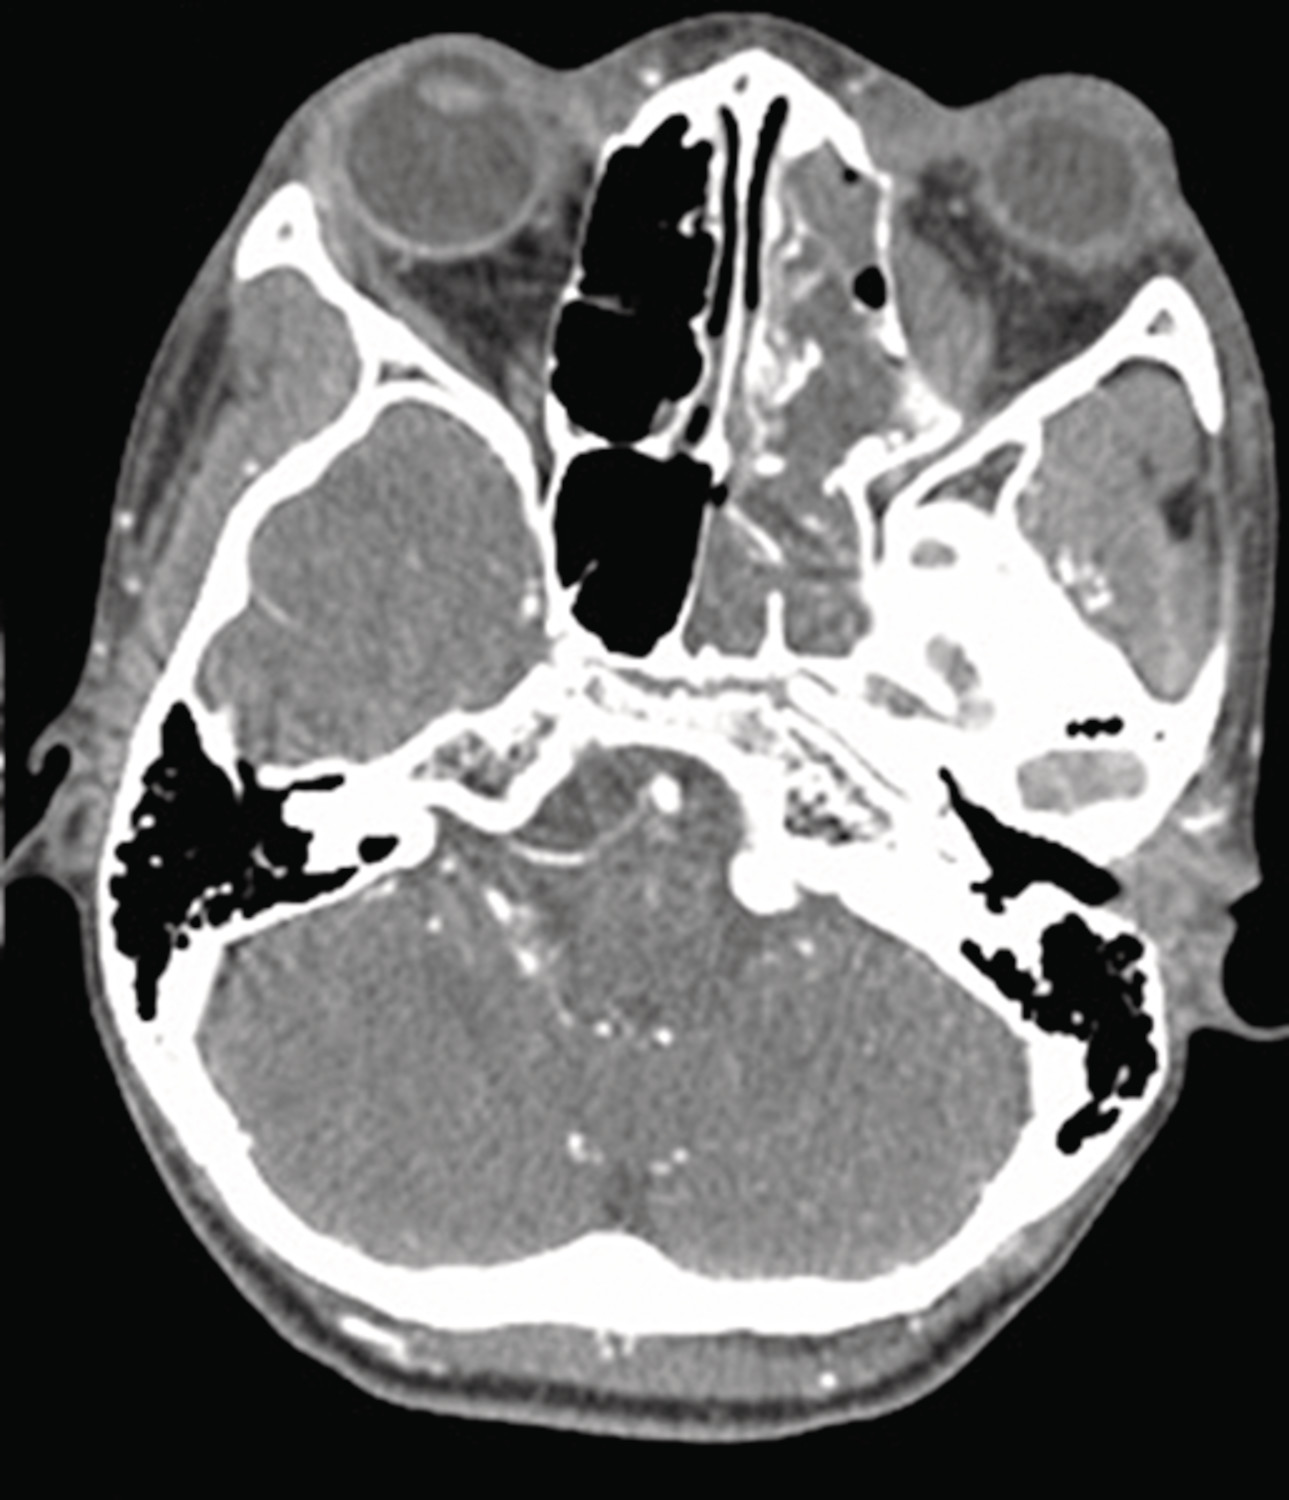 Localisation intranasale d’un projectile après un traumatisme balistique craniofacial - Figure 3